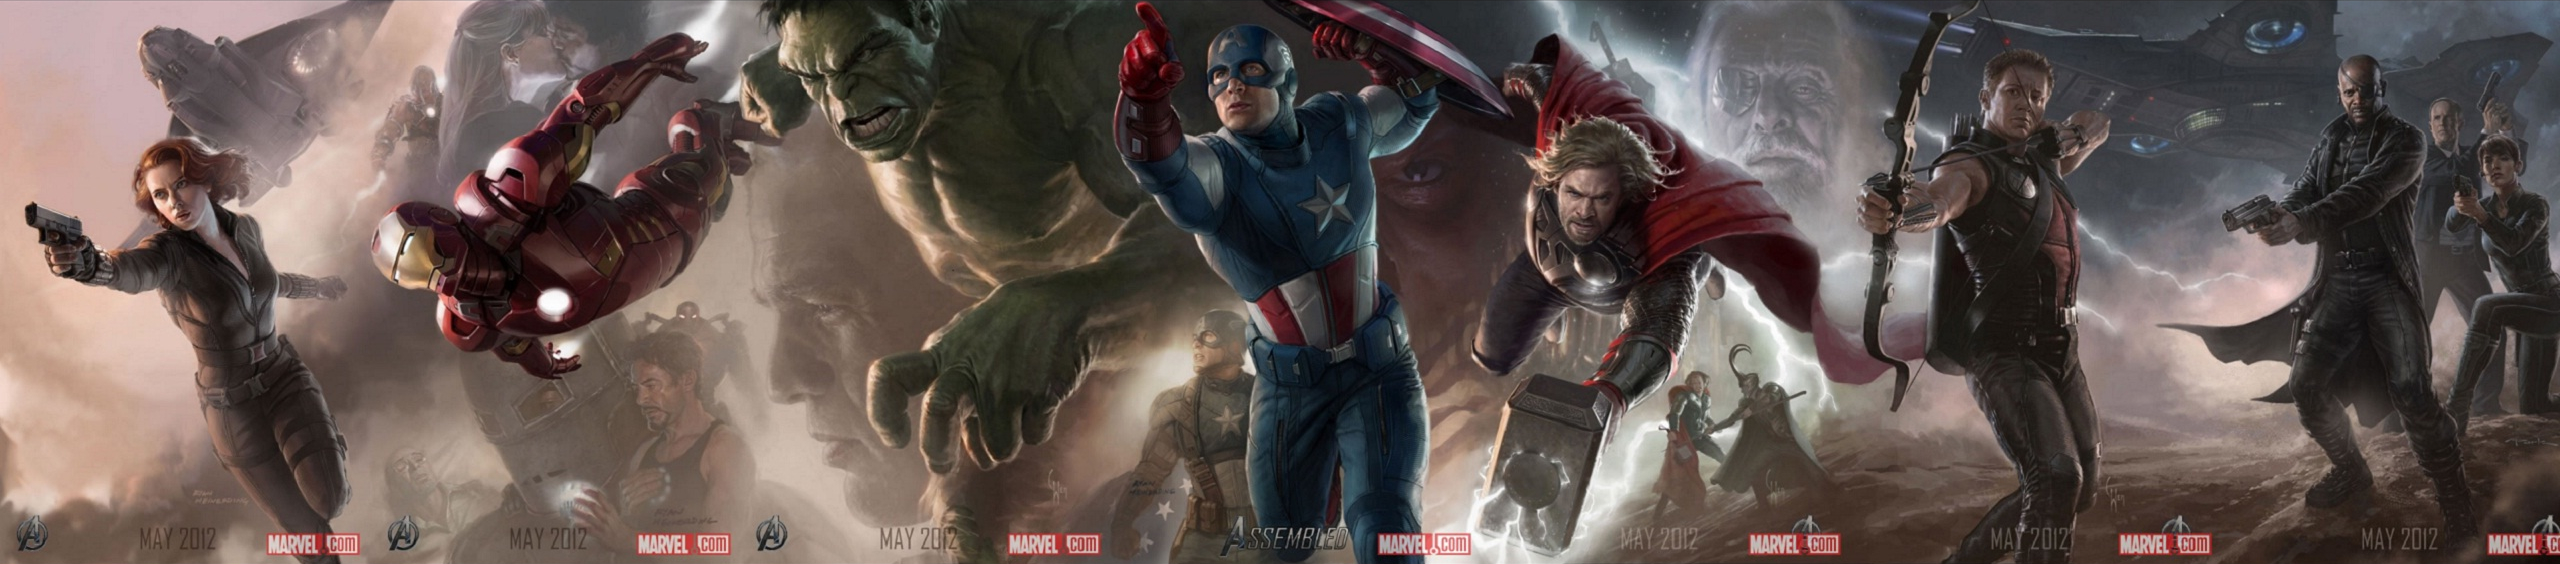 The Avengers superhero team assembled: Black Widow, Iron Man, Hulk, Captain America, Thor, Hawkeye, and Nick Fury.